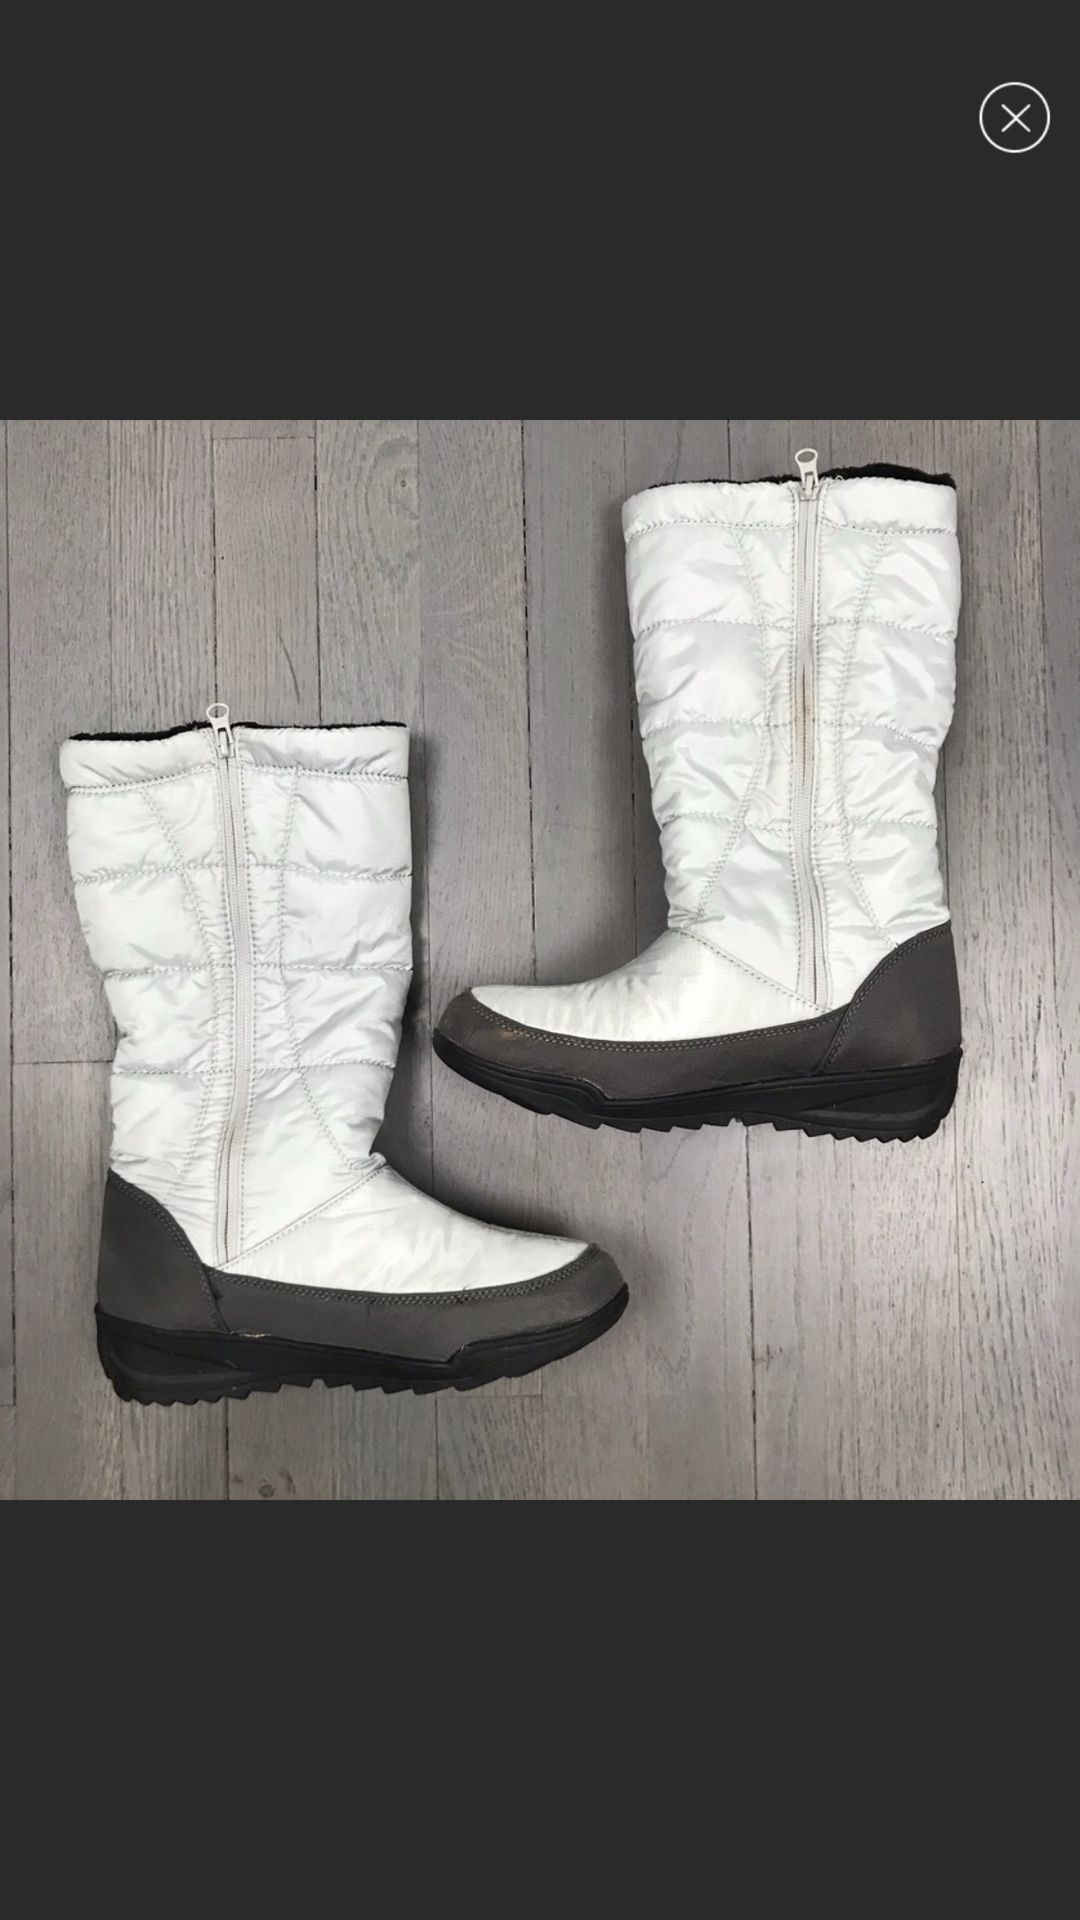 Kamik Women’s Waterproof Snow Boots size 9